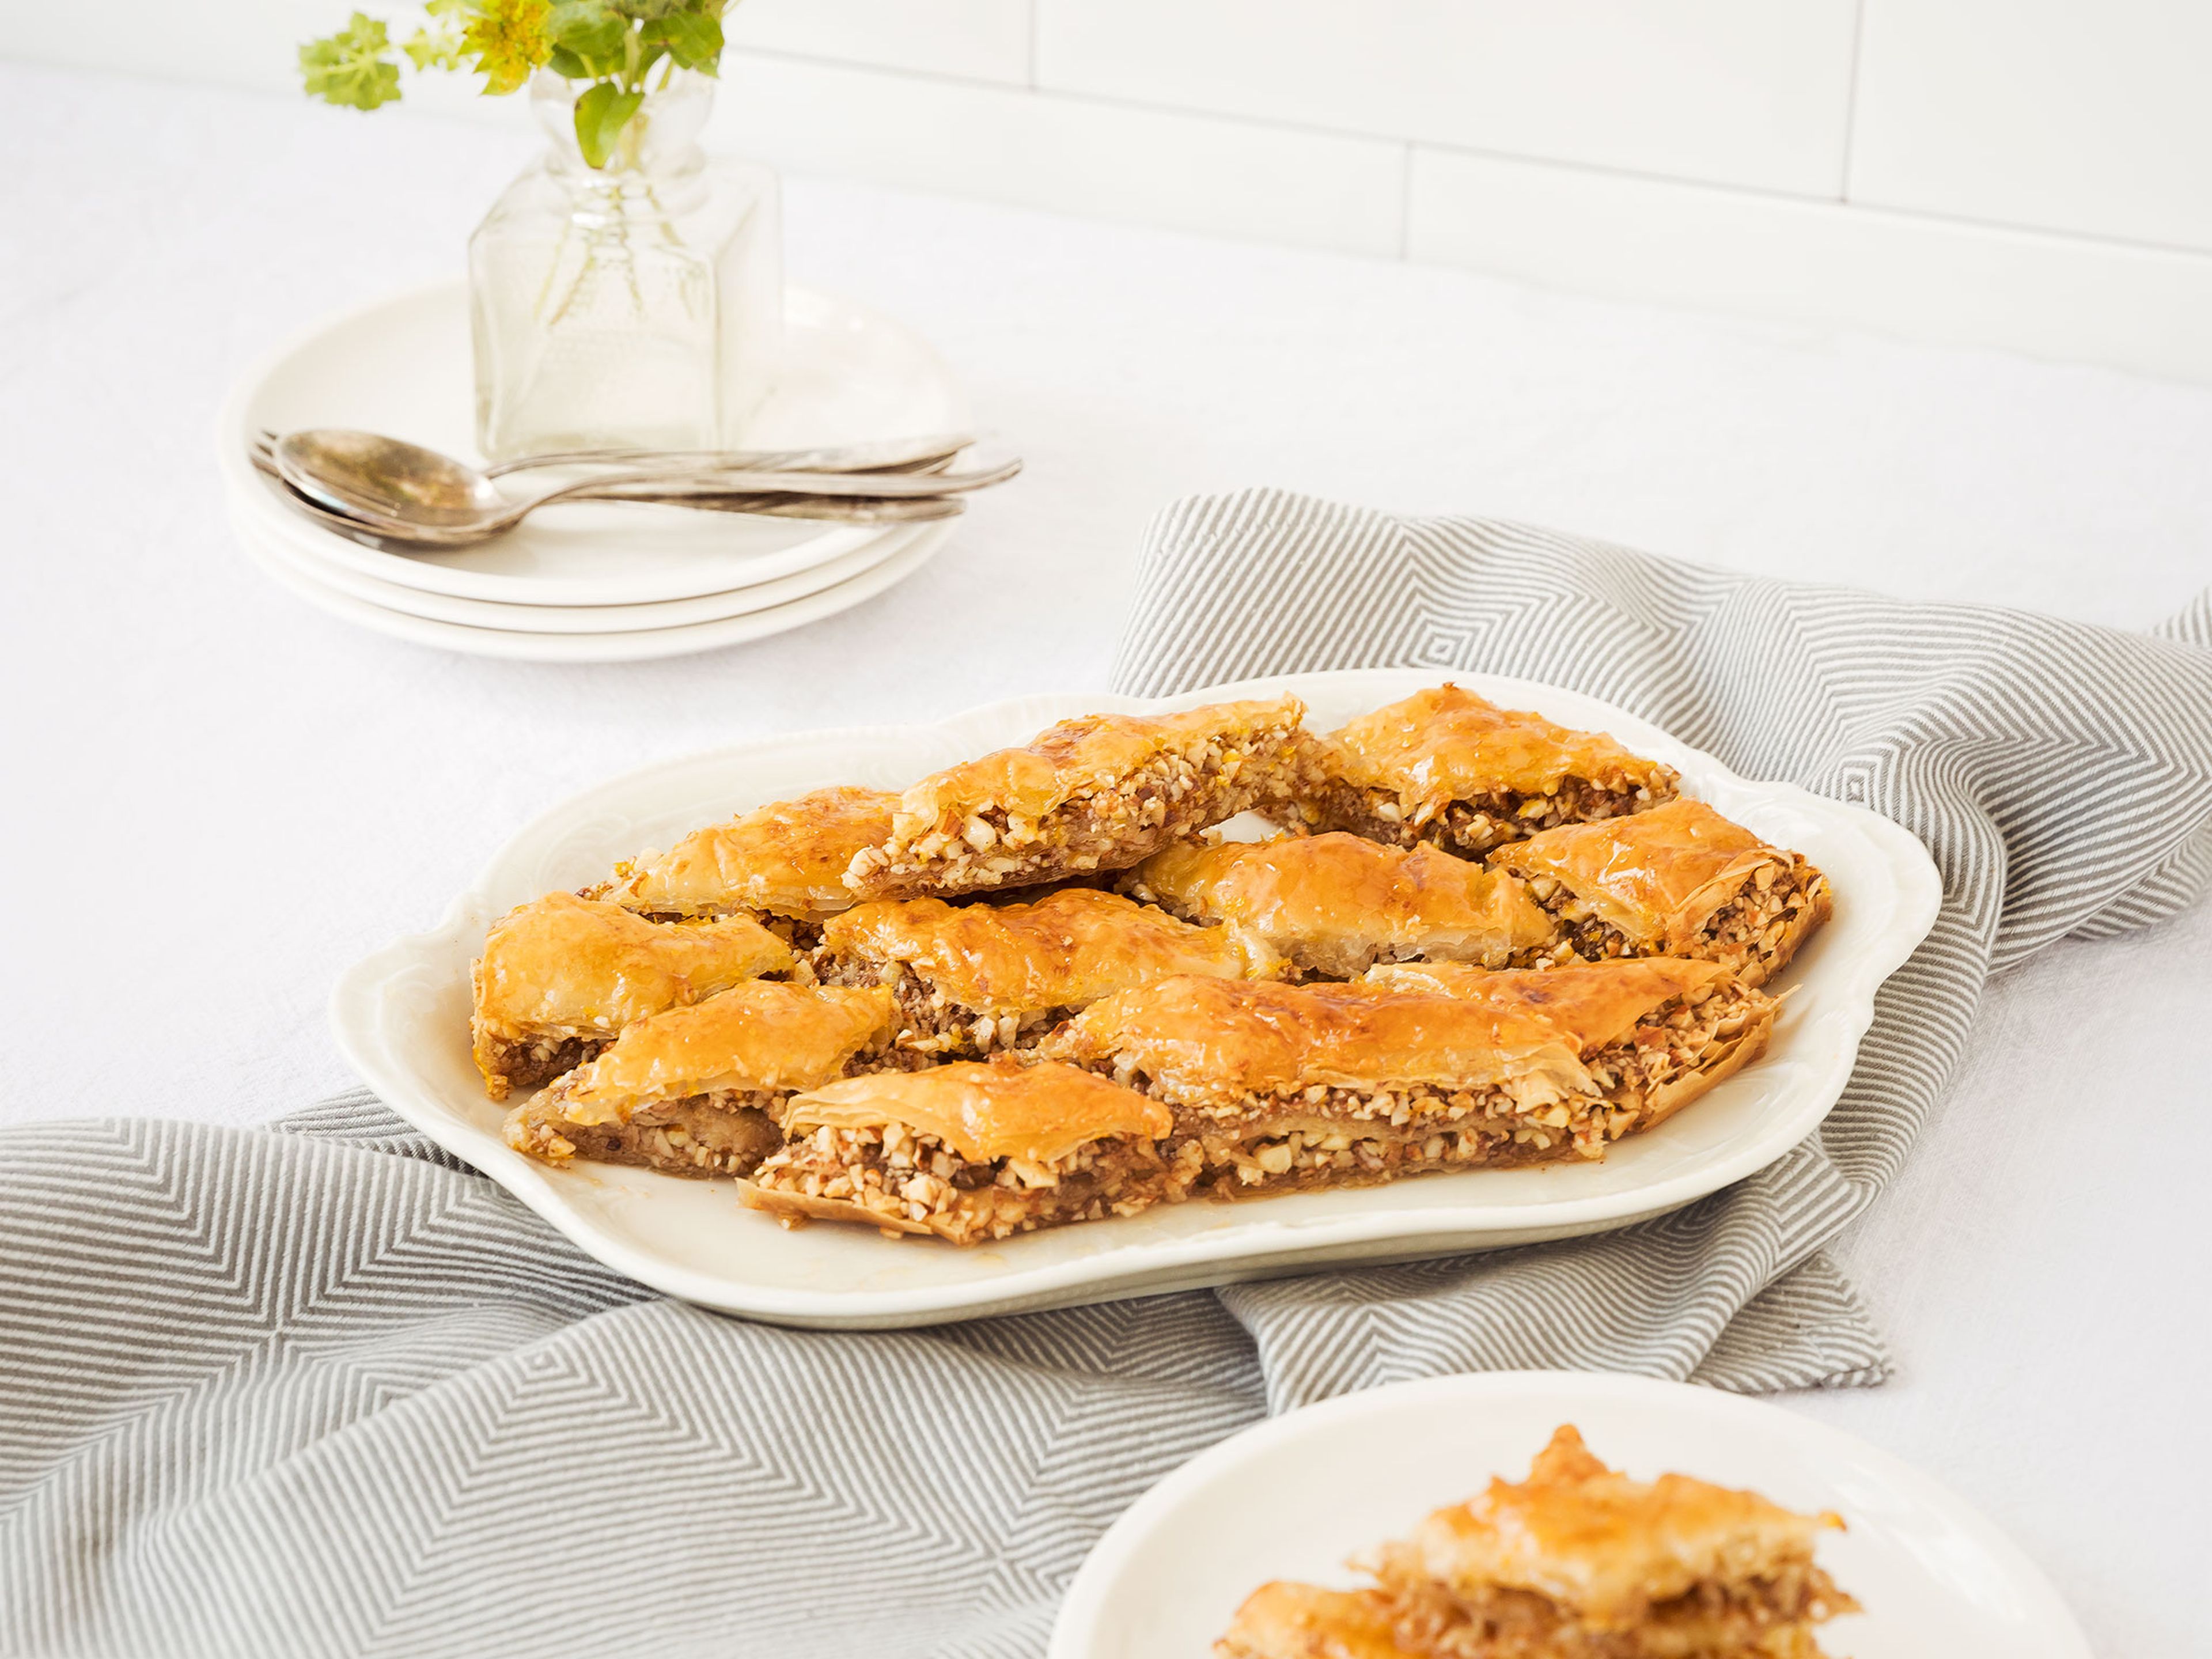 Honeyed almond baklava